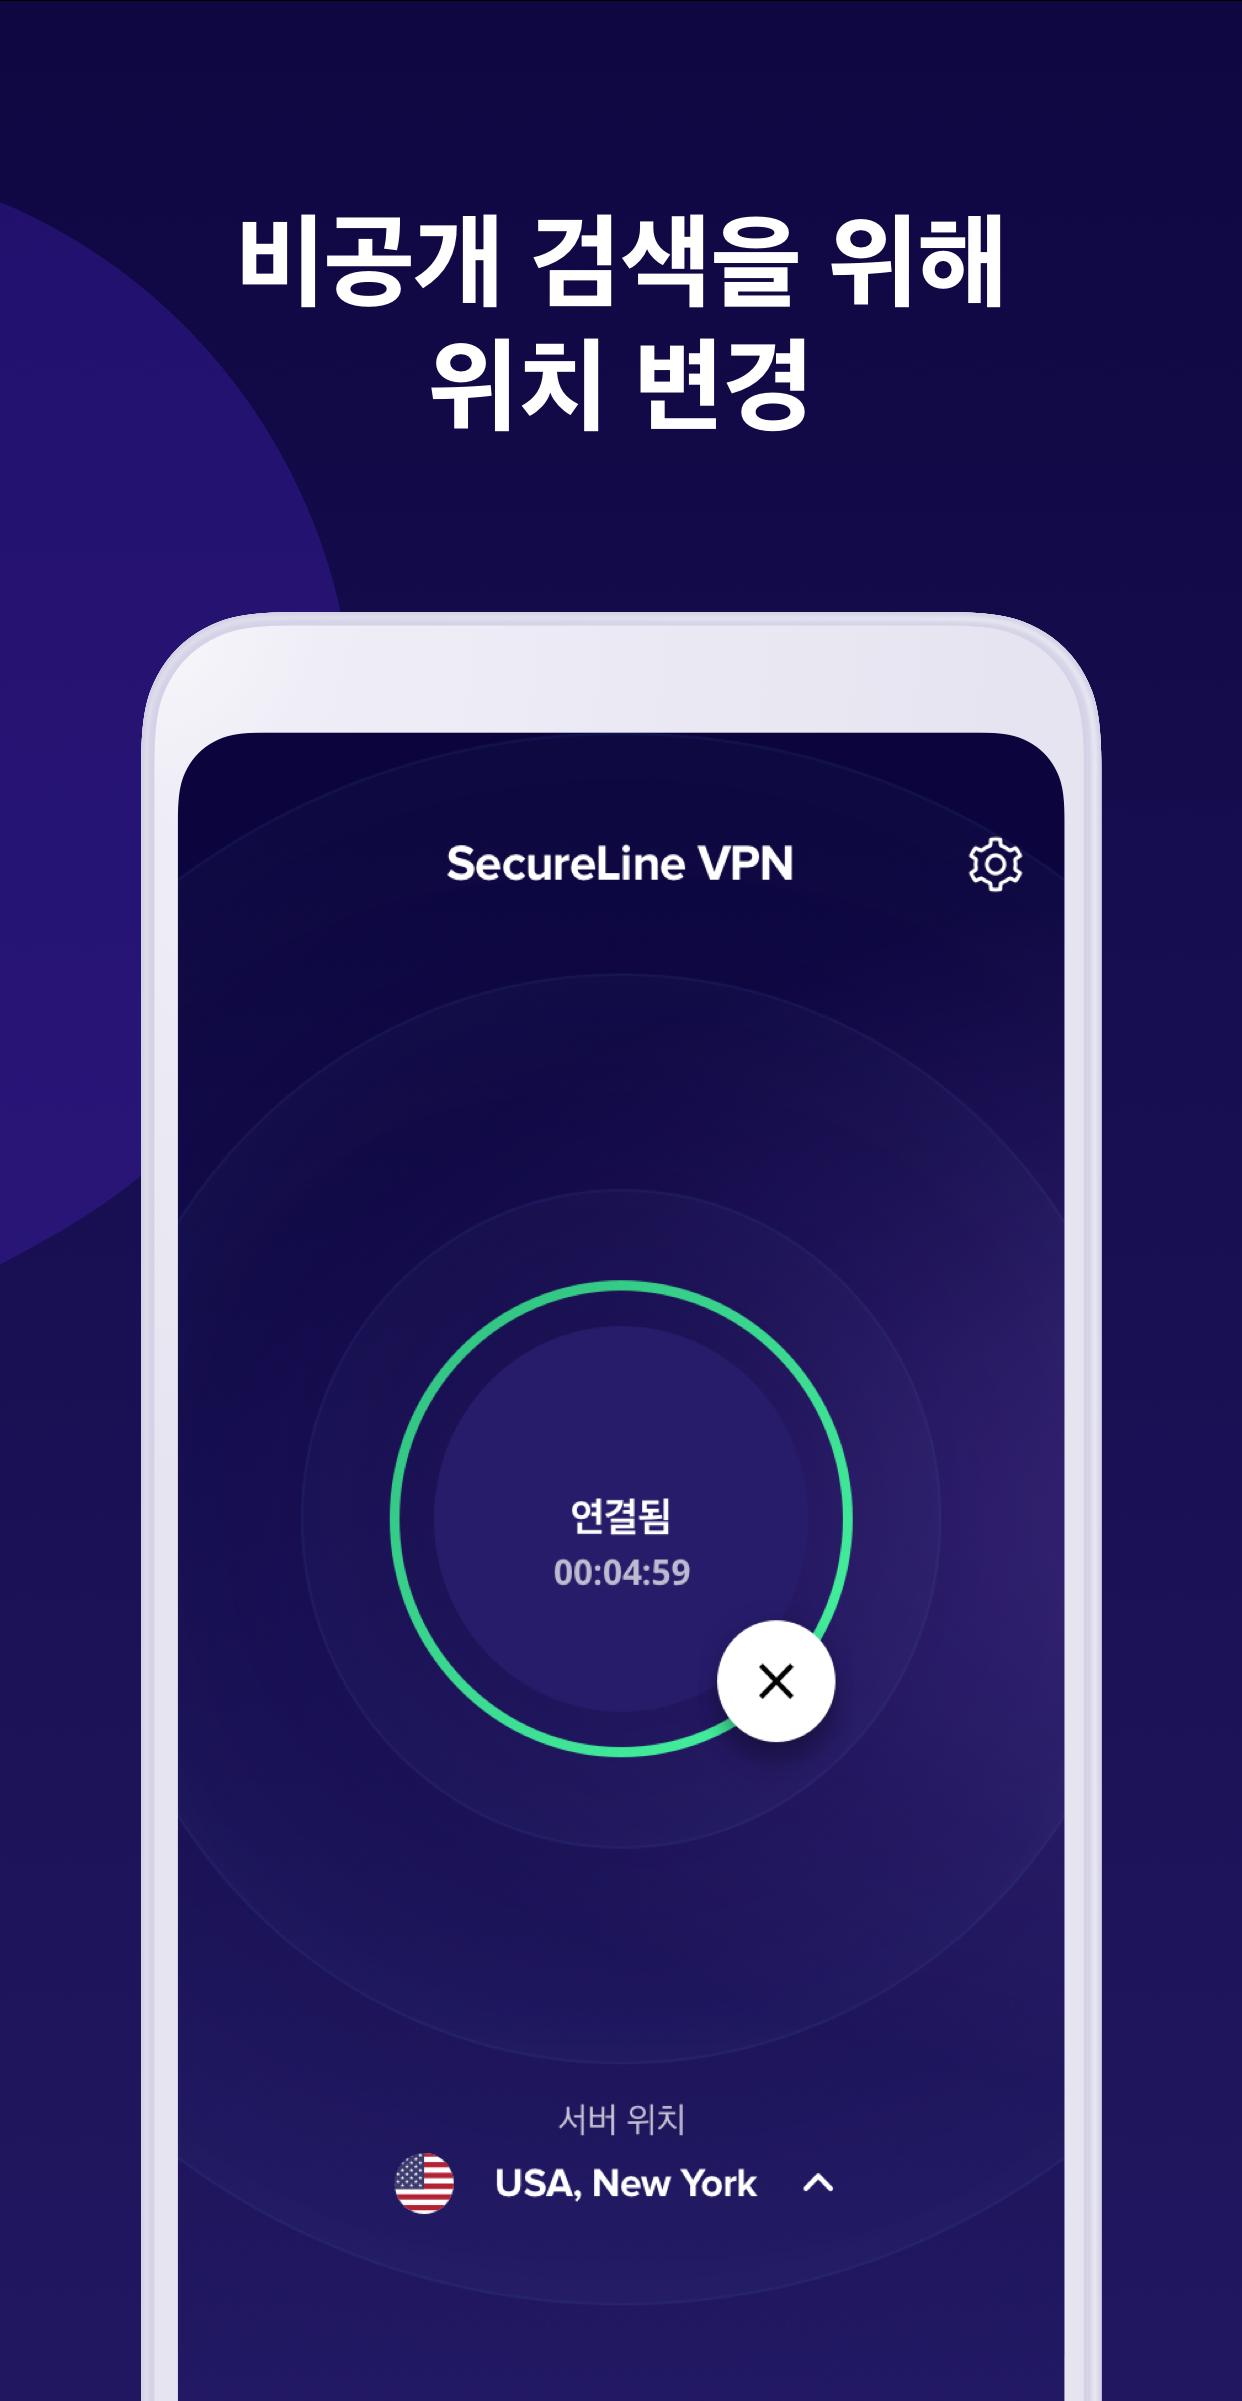 Avast VPN SecureLine: 빠른 속도 & 익명 보장하는 온라인 보안